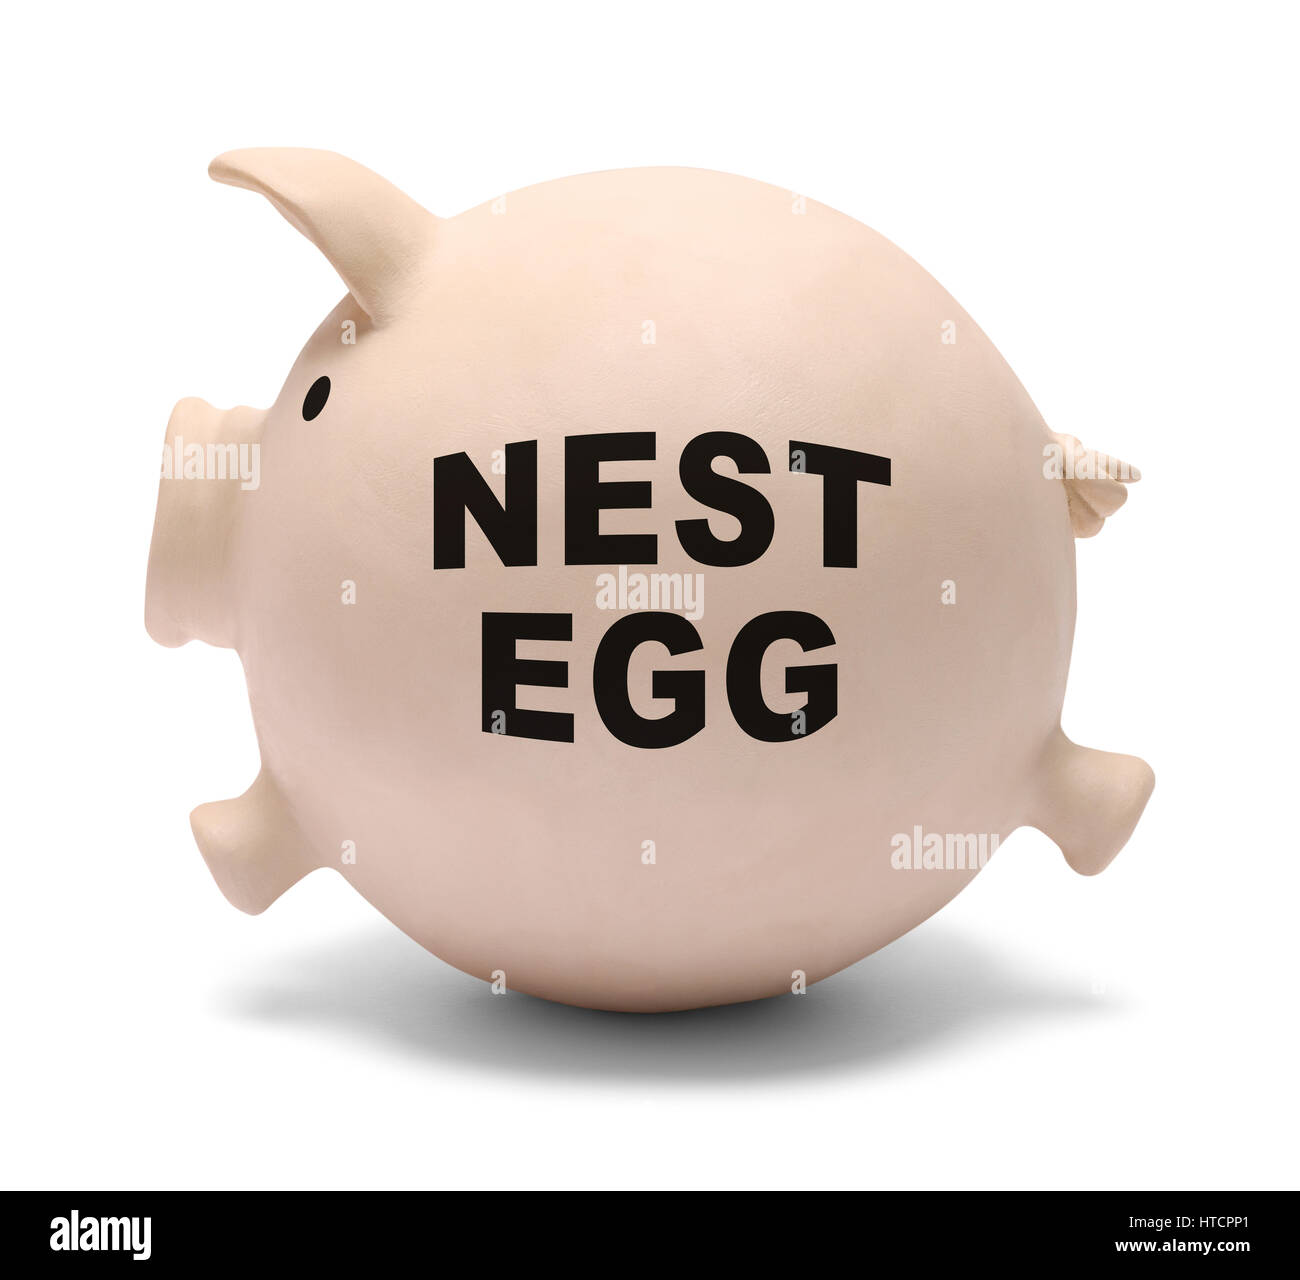 Fat Nest Egg Piggy Bank Isolated on White Background. Stock Photo